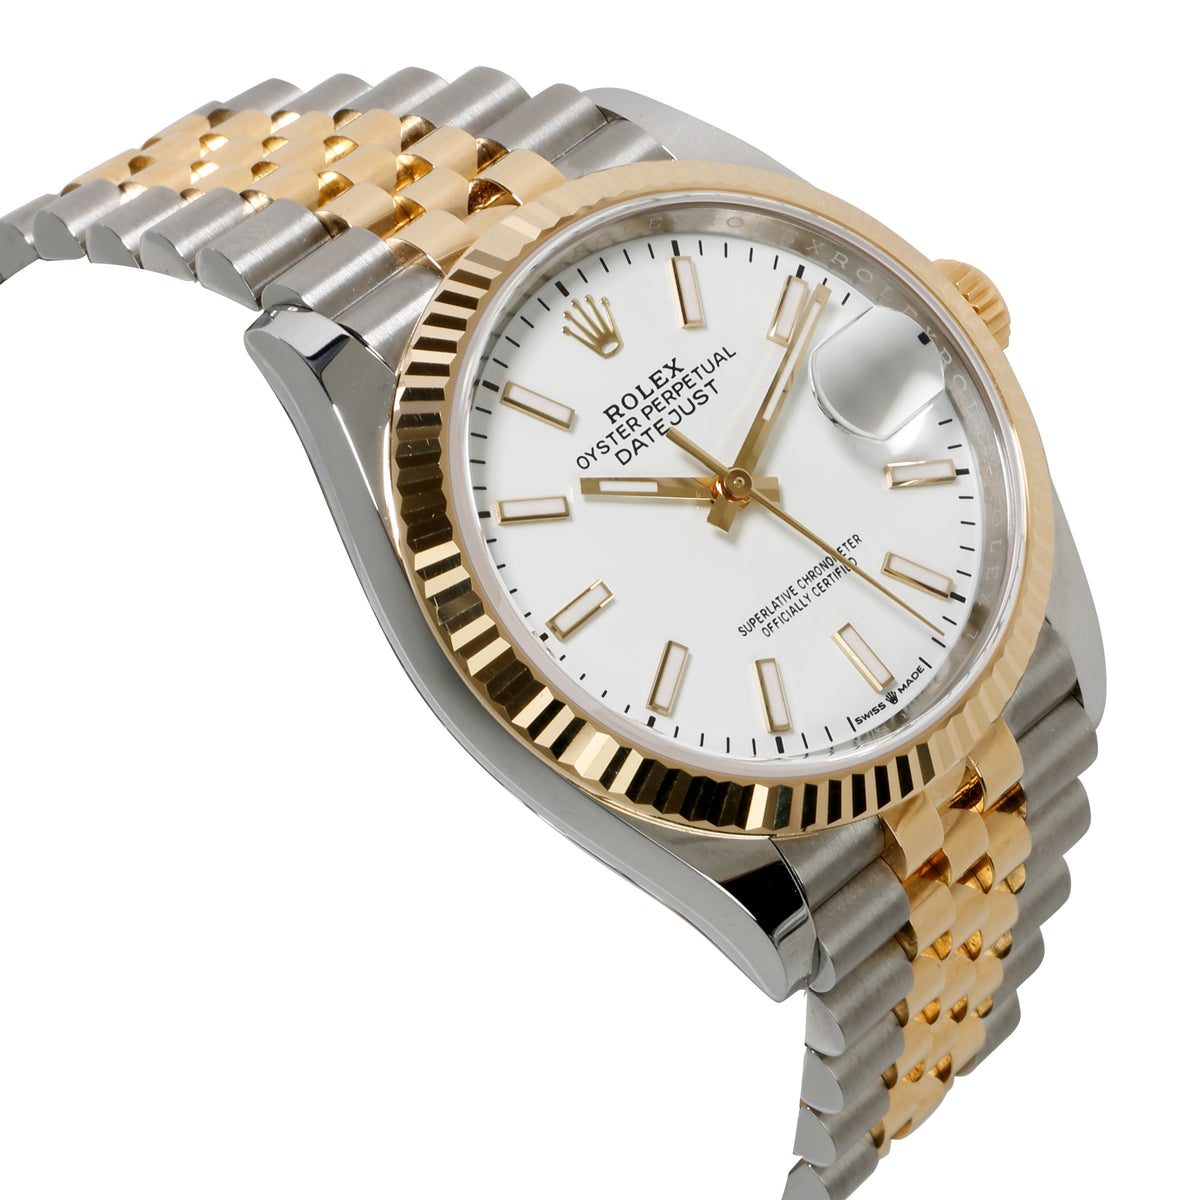 Rolex Datejust 126233 Men's Watch in 18kt Stainless Steel/Yellow Gold